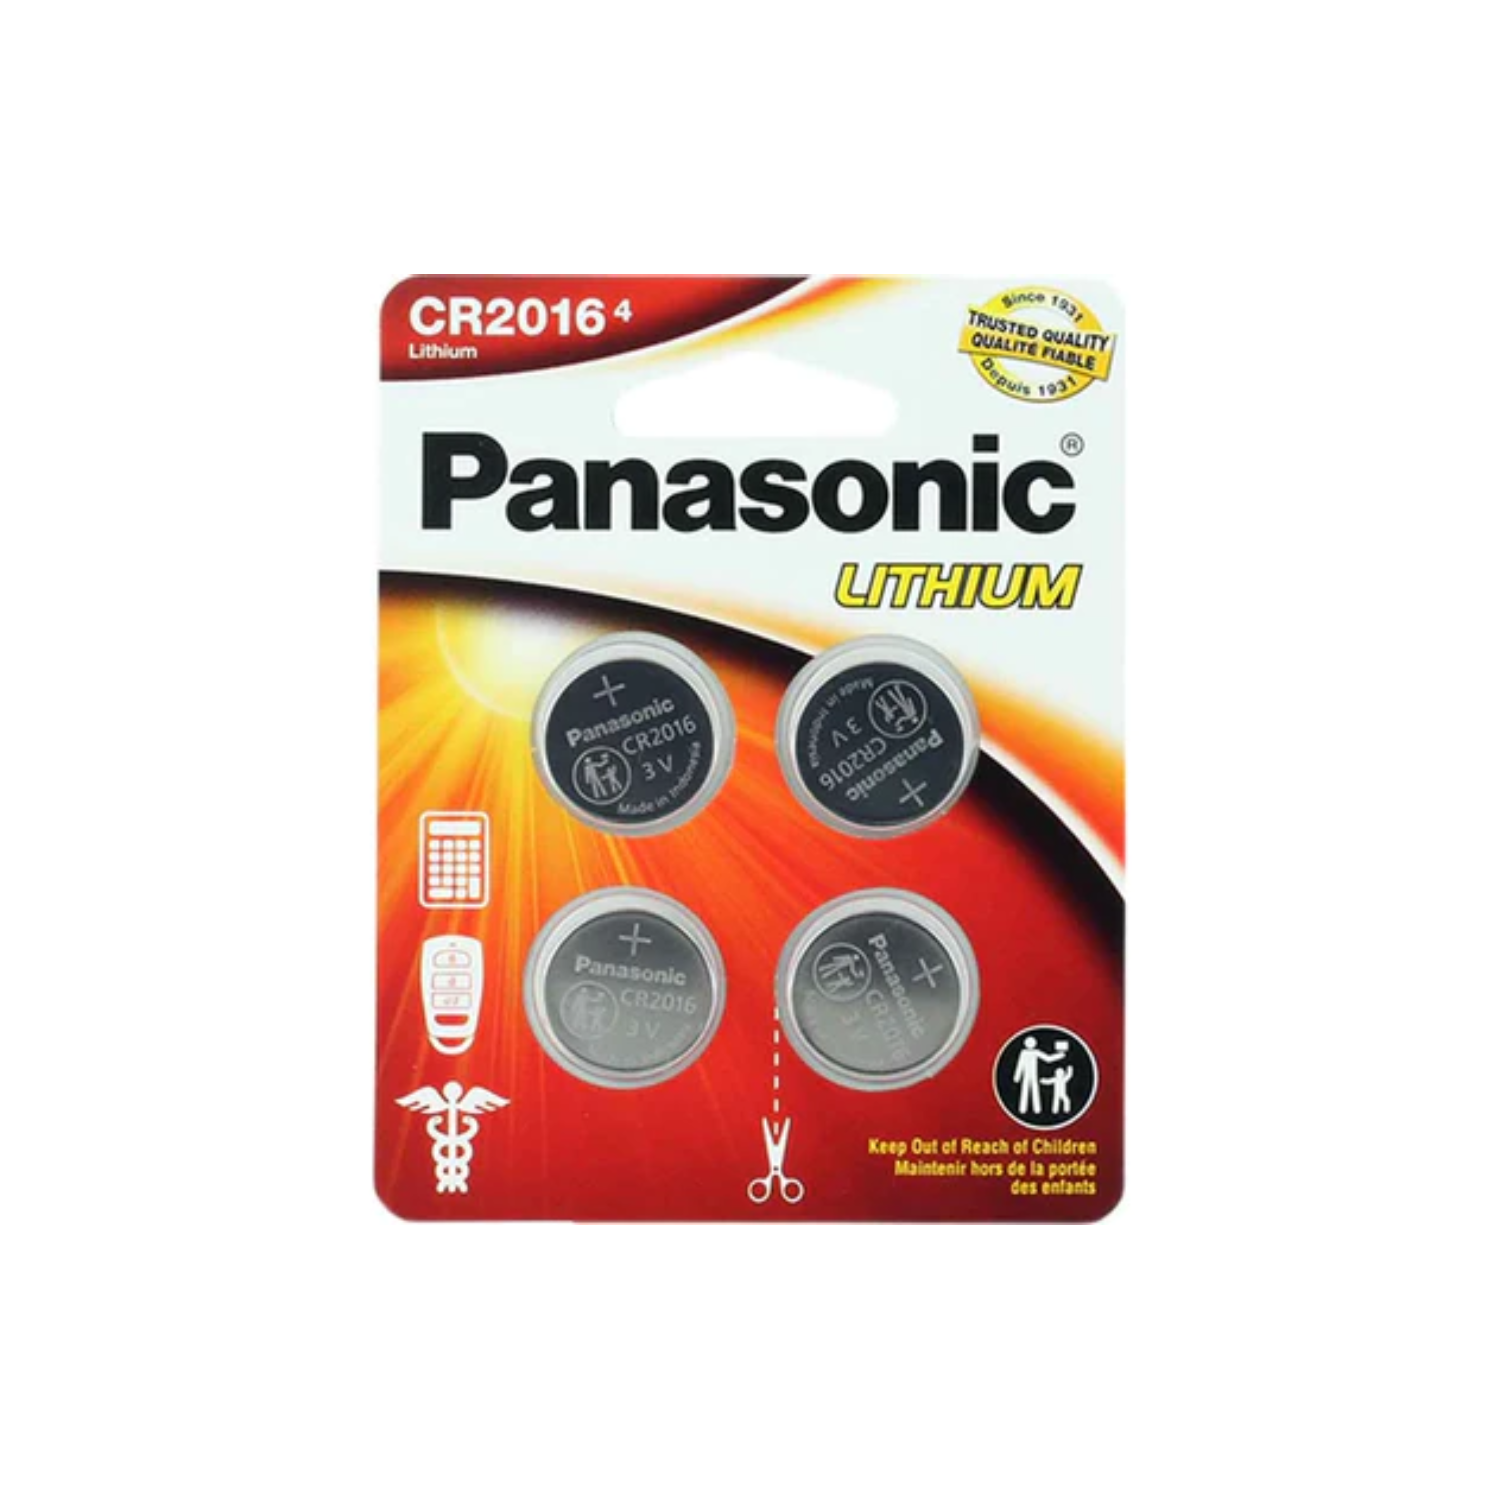 Panasonic CR2016 3V Lithium Coin Cell Battery - 90mAh, 4 pack